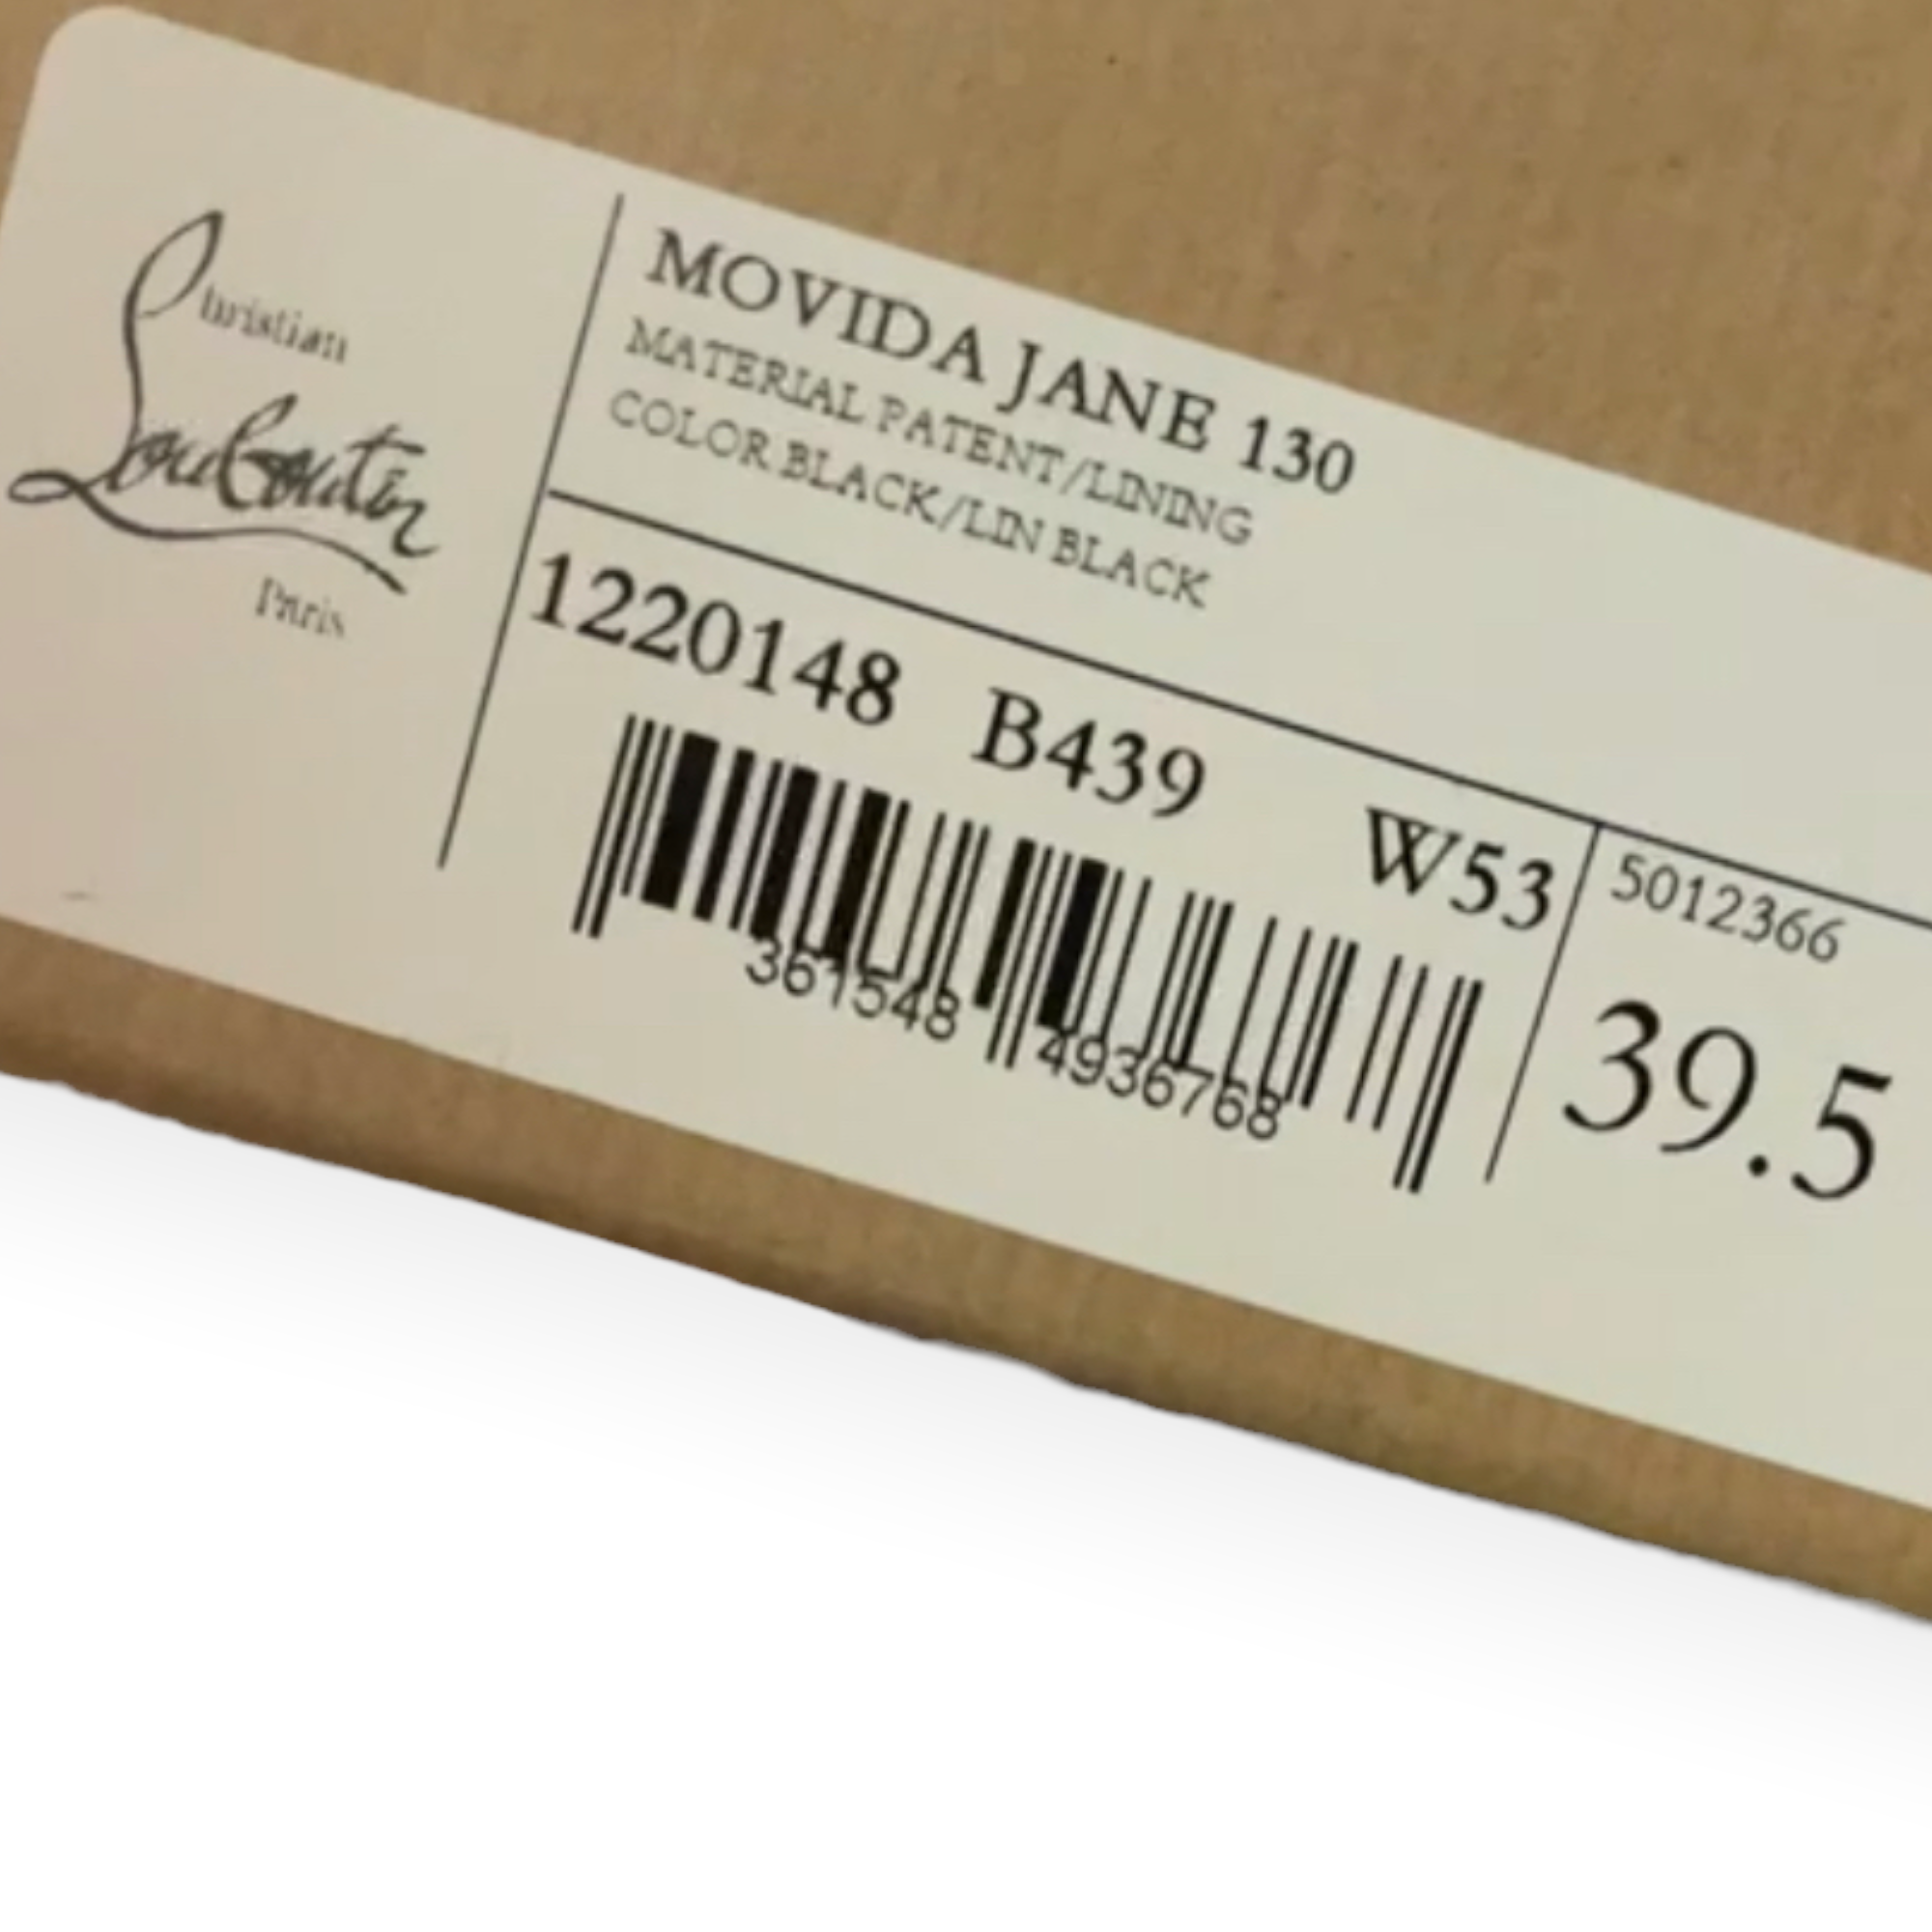 CHRISTIAN LOUBOUTIN  Movida Patent Mary Jane Red Sole Pumps |Size: 39.5|